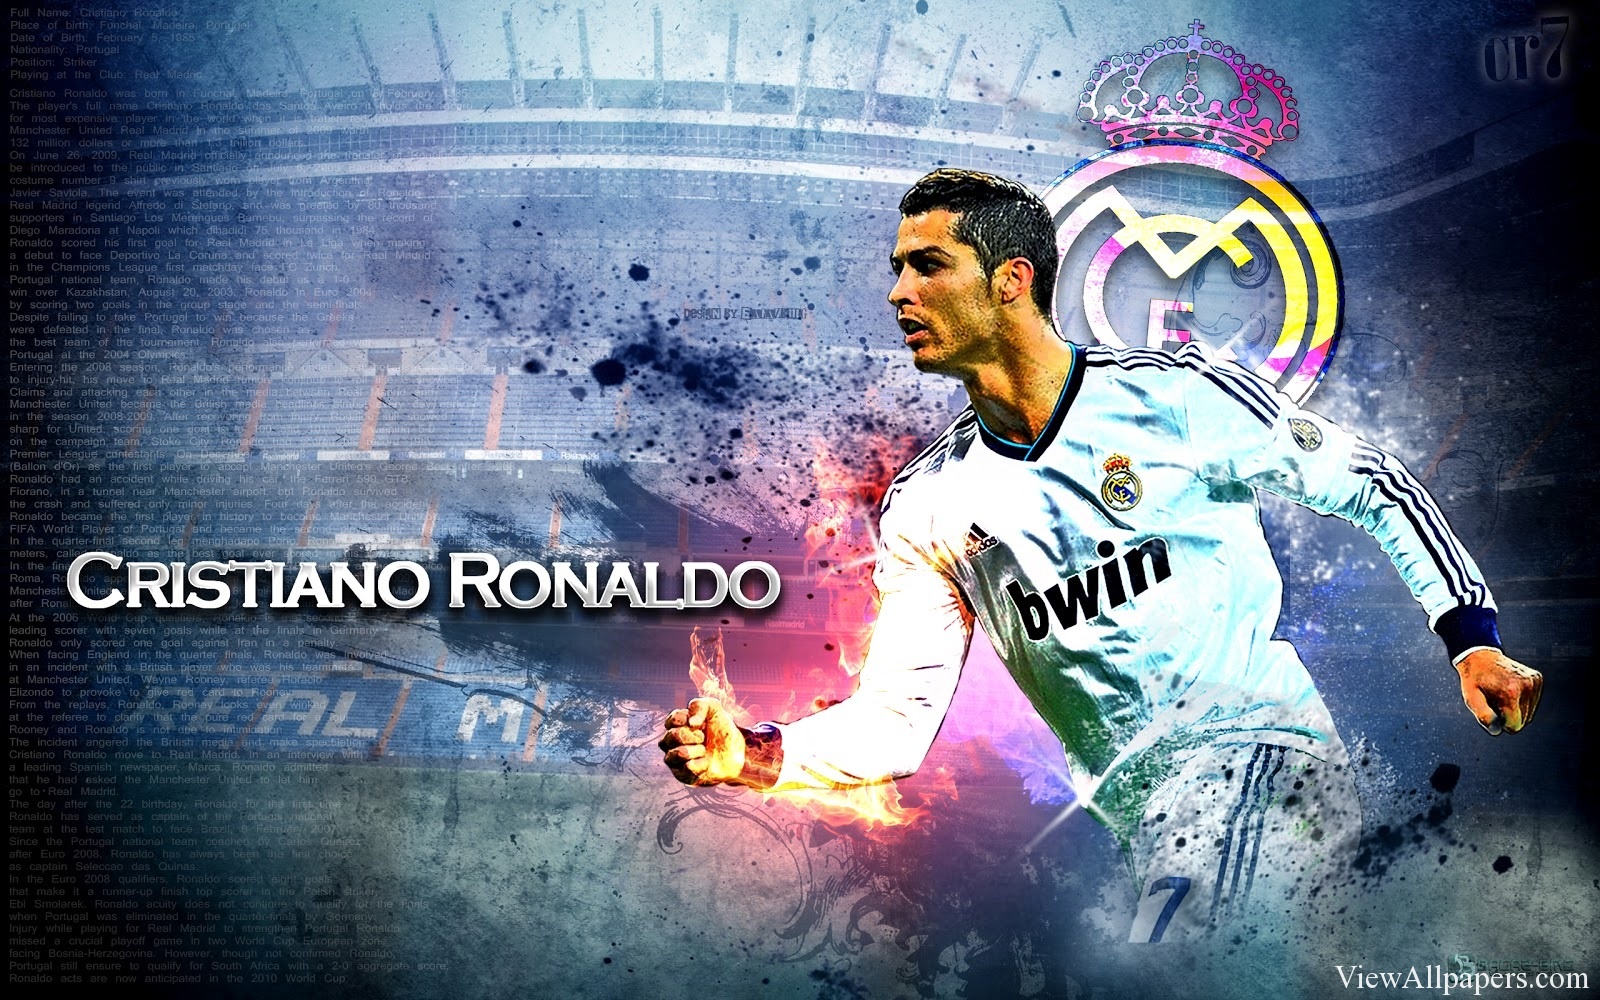 Ronaldo Wallpaper High Resolution Free download this CR7 2014 Ronaldo